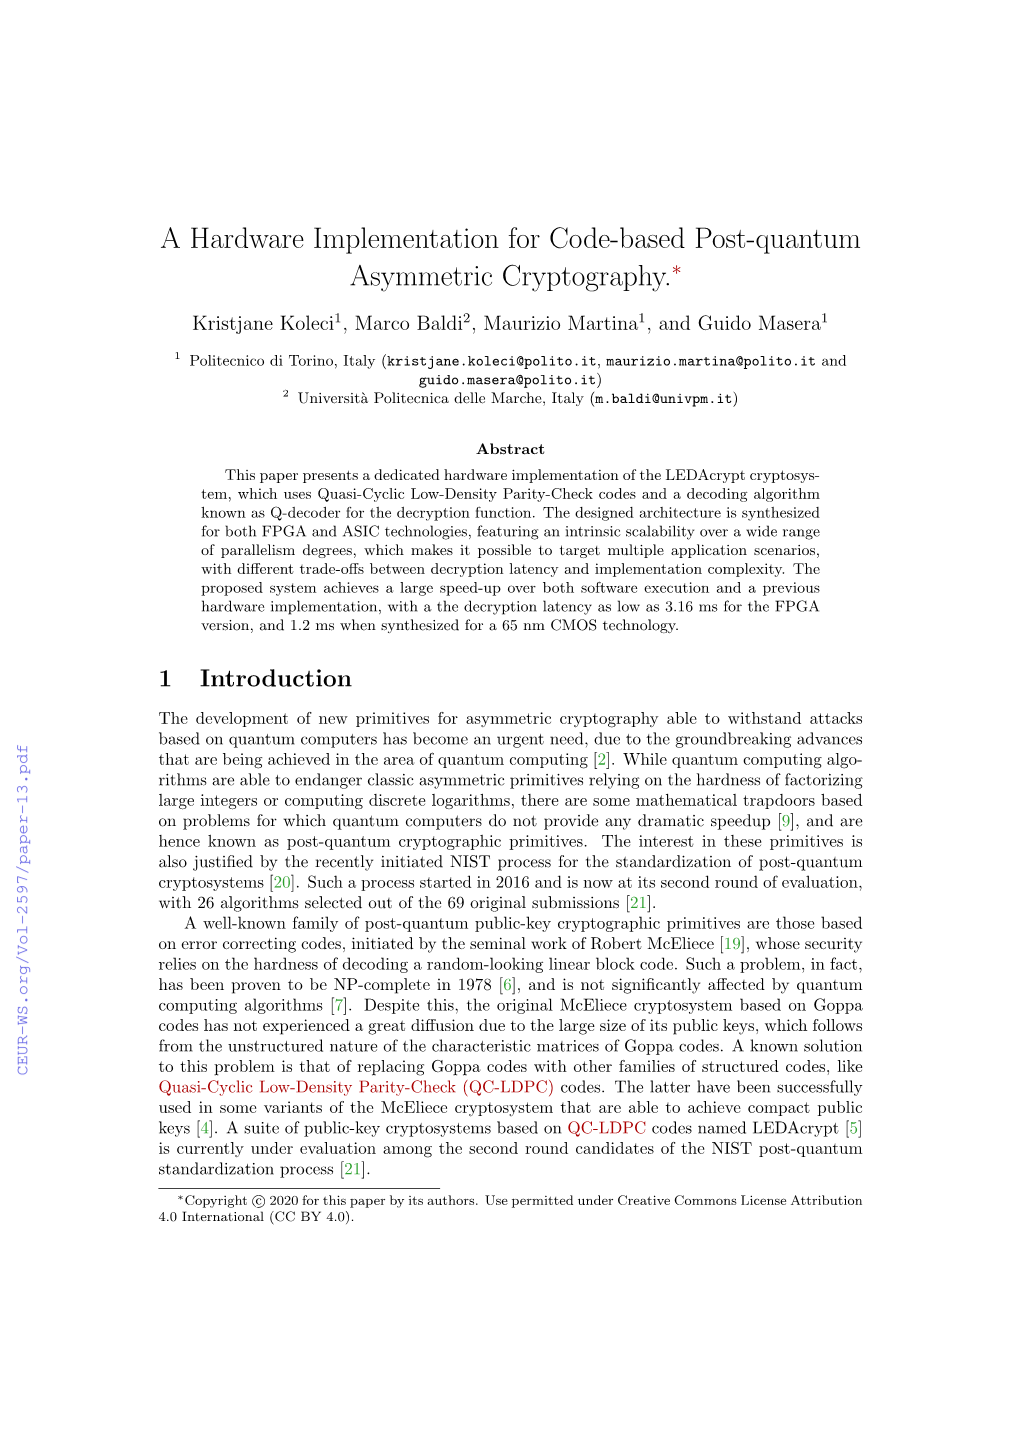 A Hardware Implementation for Code-Based Post-Quantum Asymmetric Cryptography.∗ Kristjane Koleci1, Marco Baldi2, Maurizio Martina1, and Guido Masera1